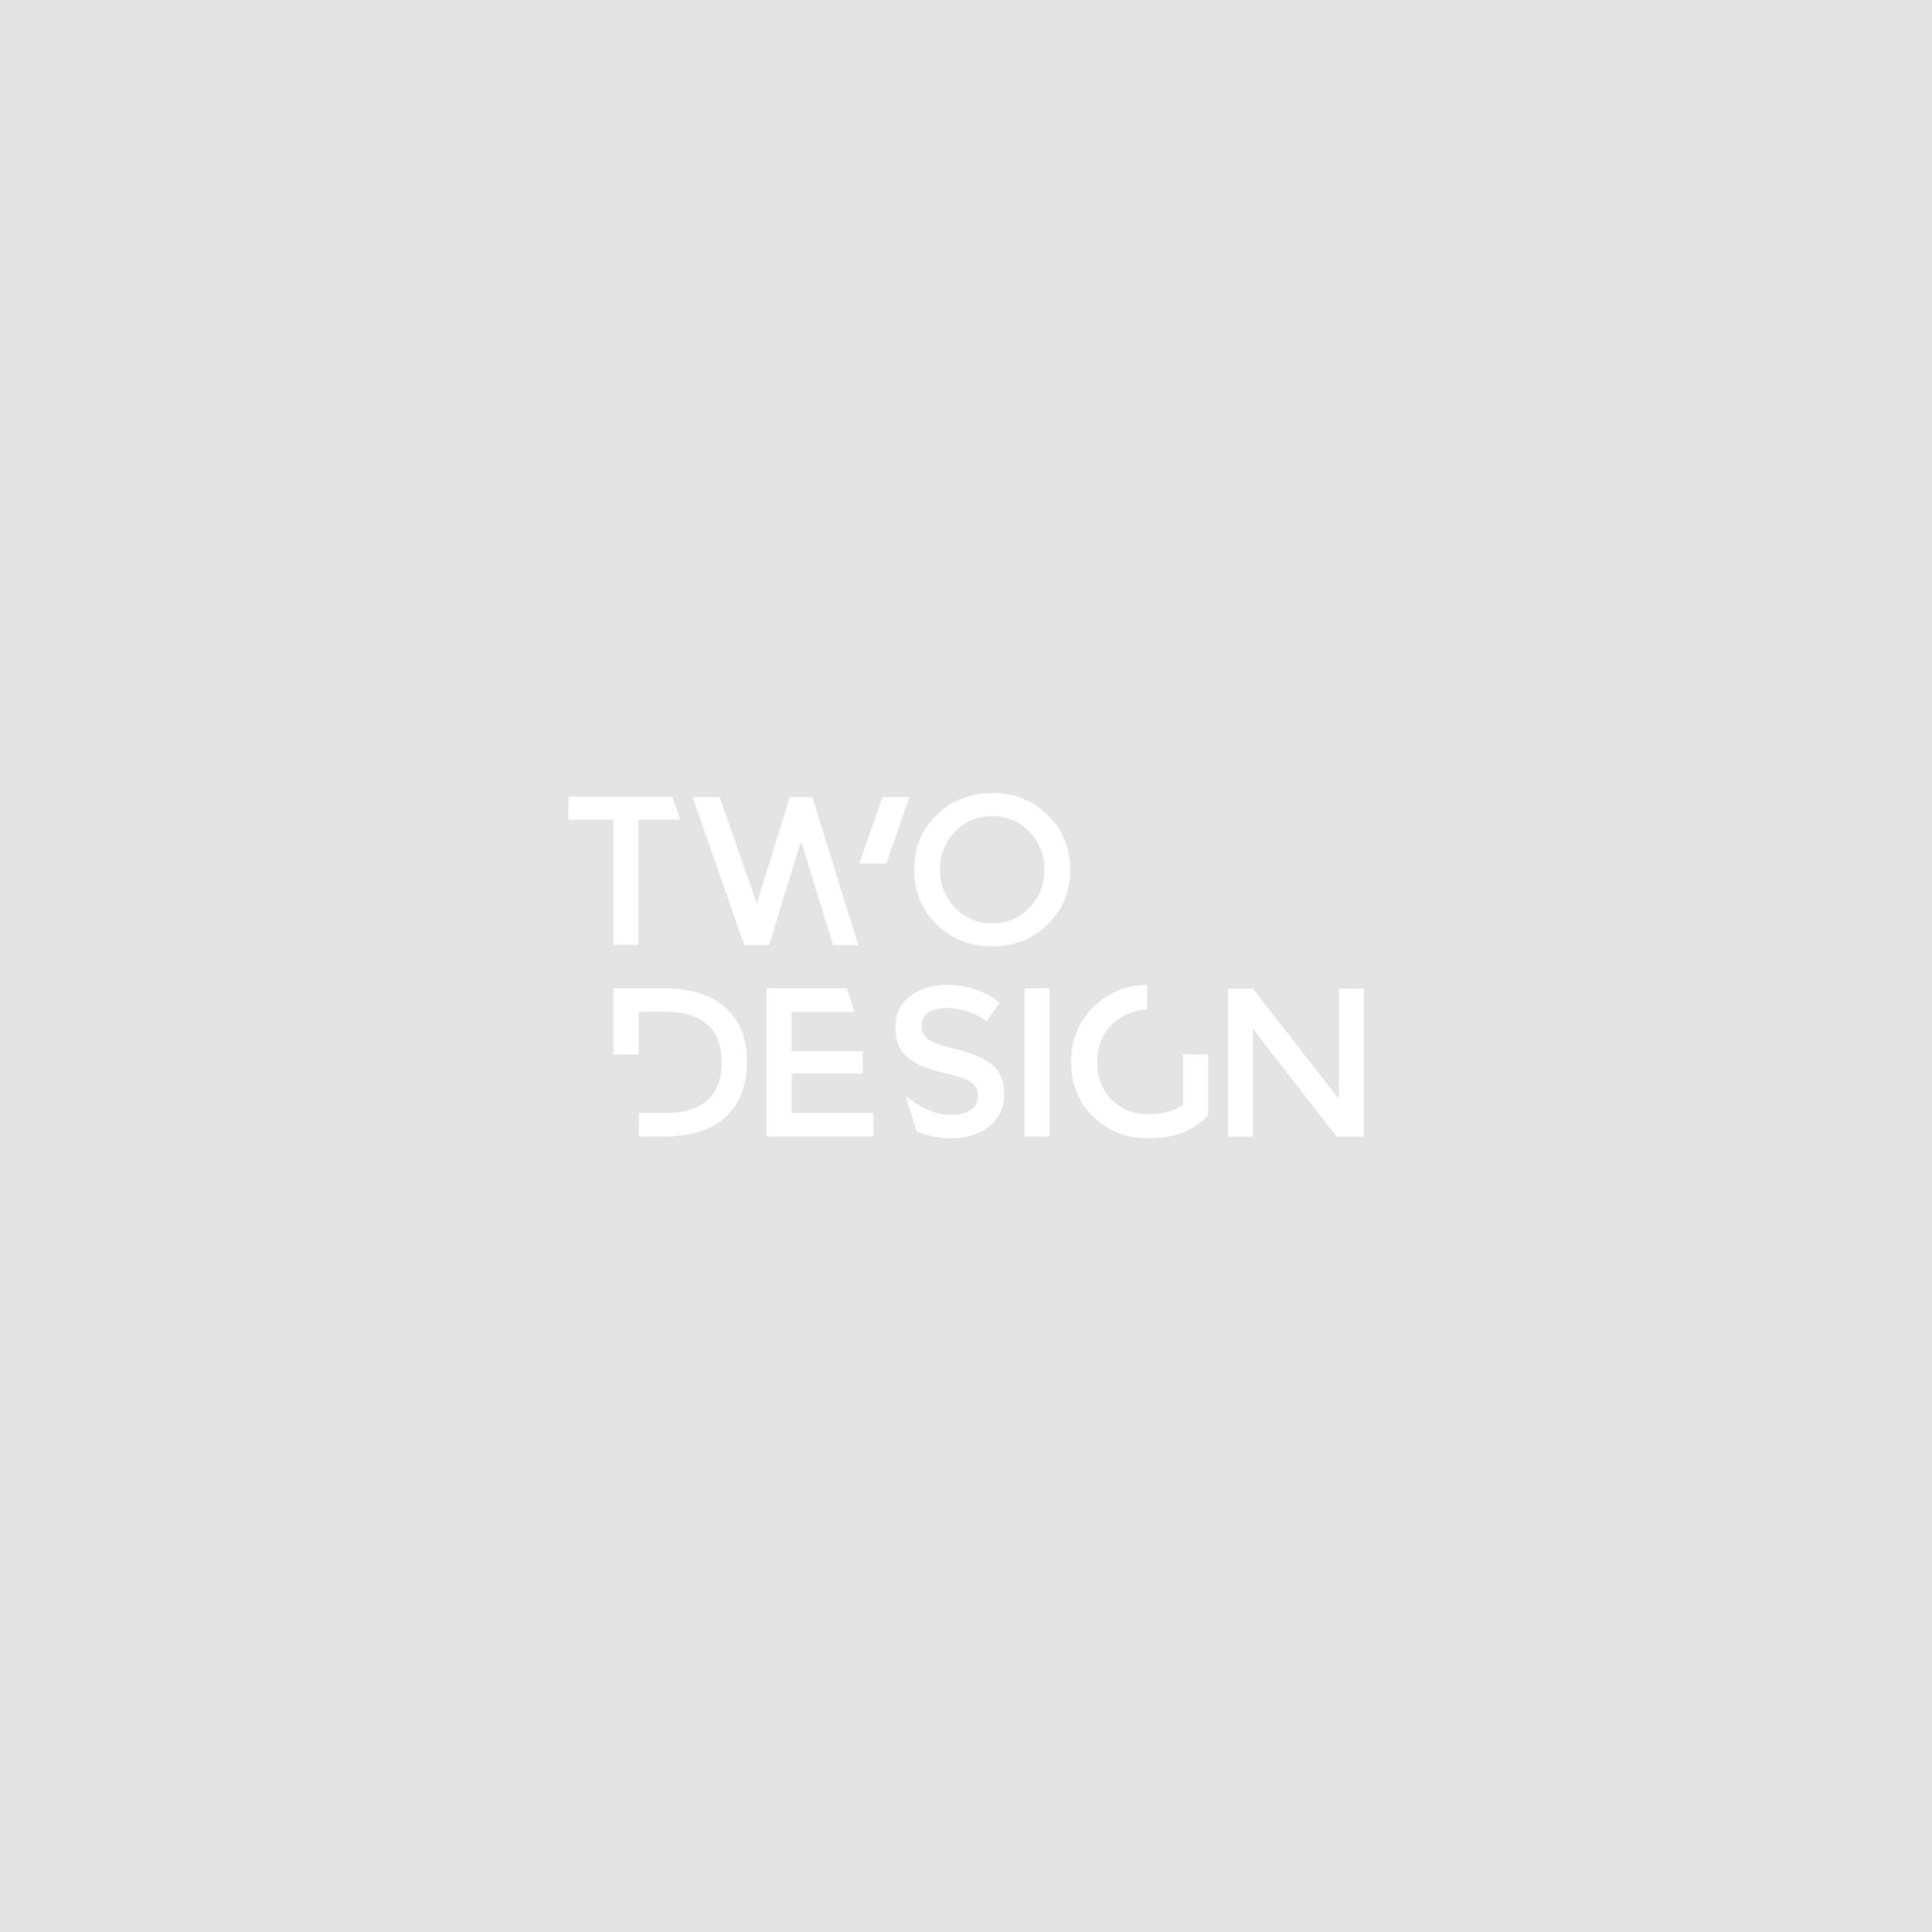 Two_design_placeholder 2.jpg